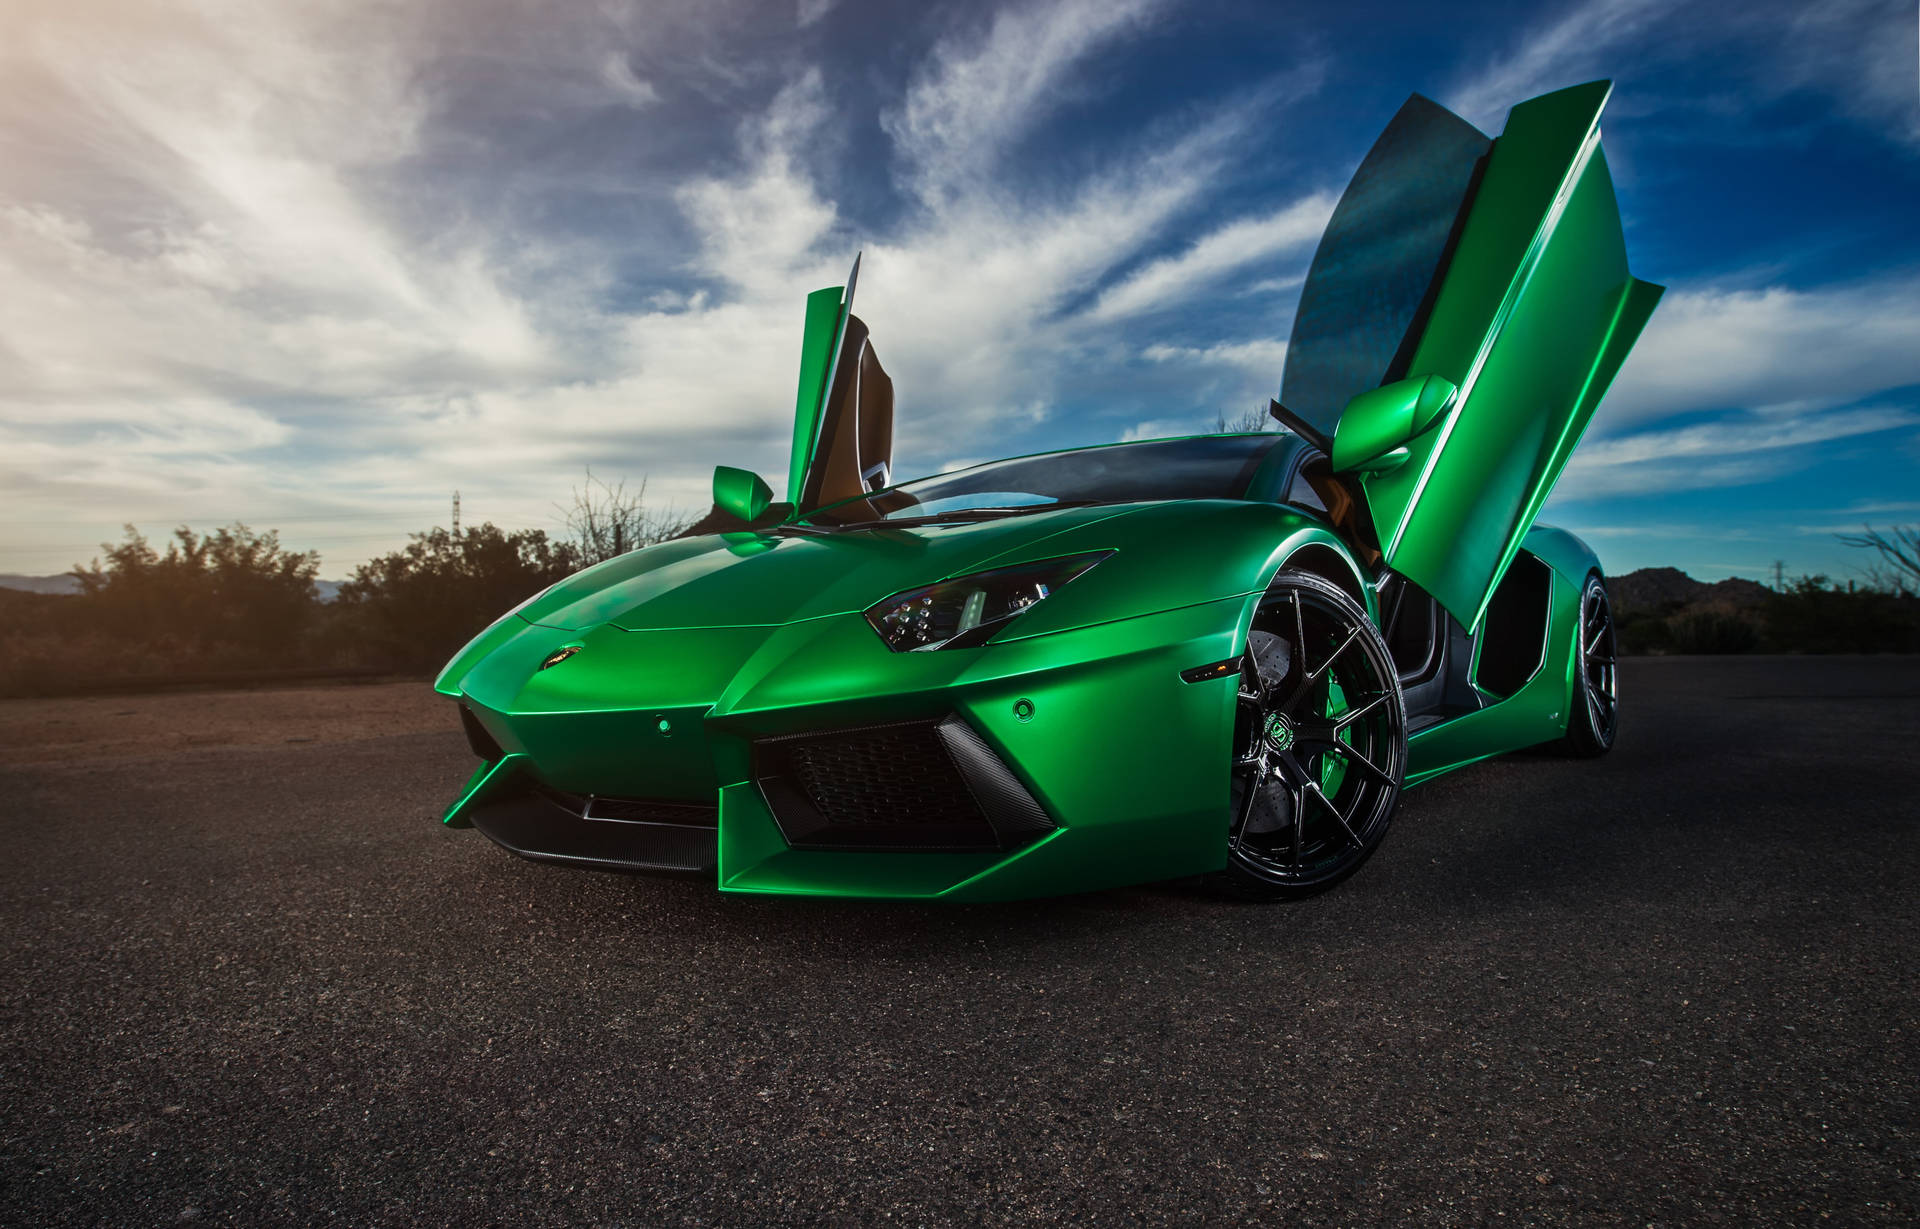 Luxury On Wheels: Stunning Lamborghini In 4k Wallpaper